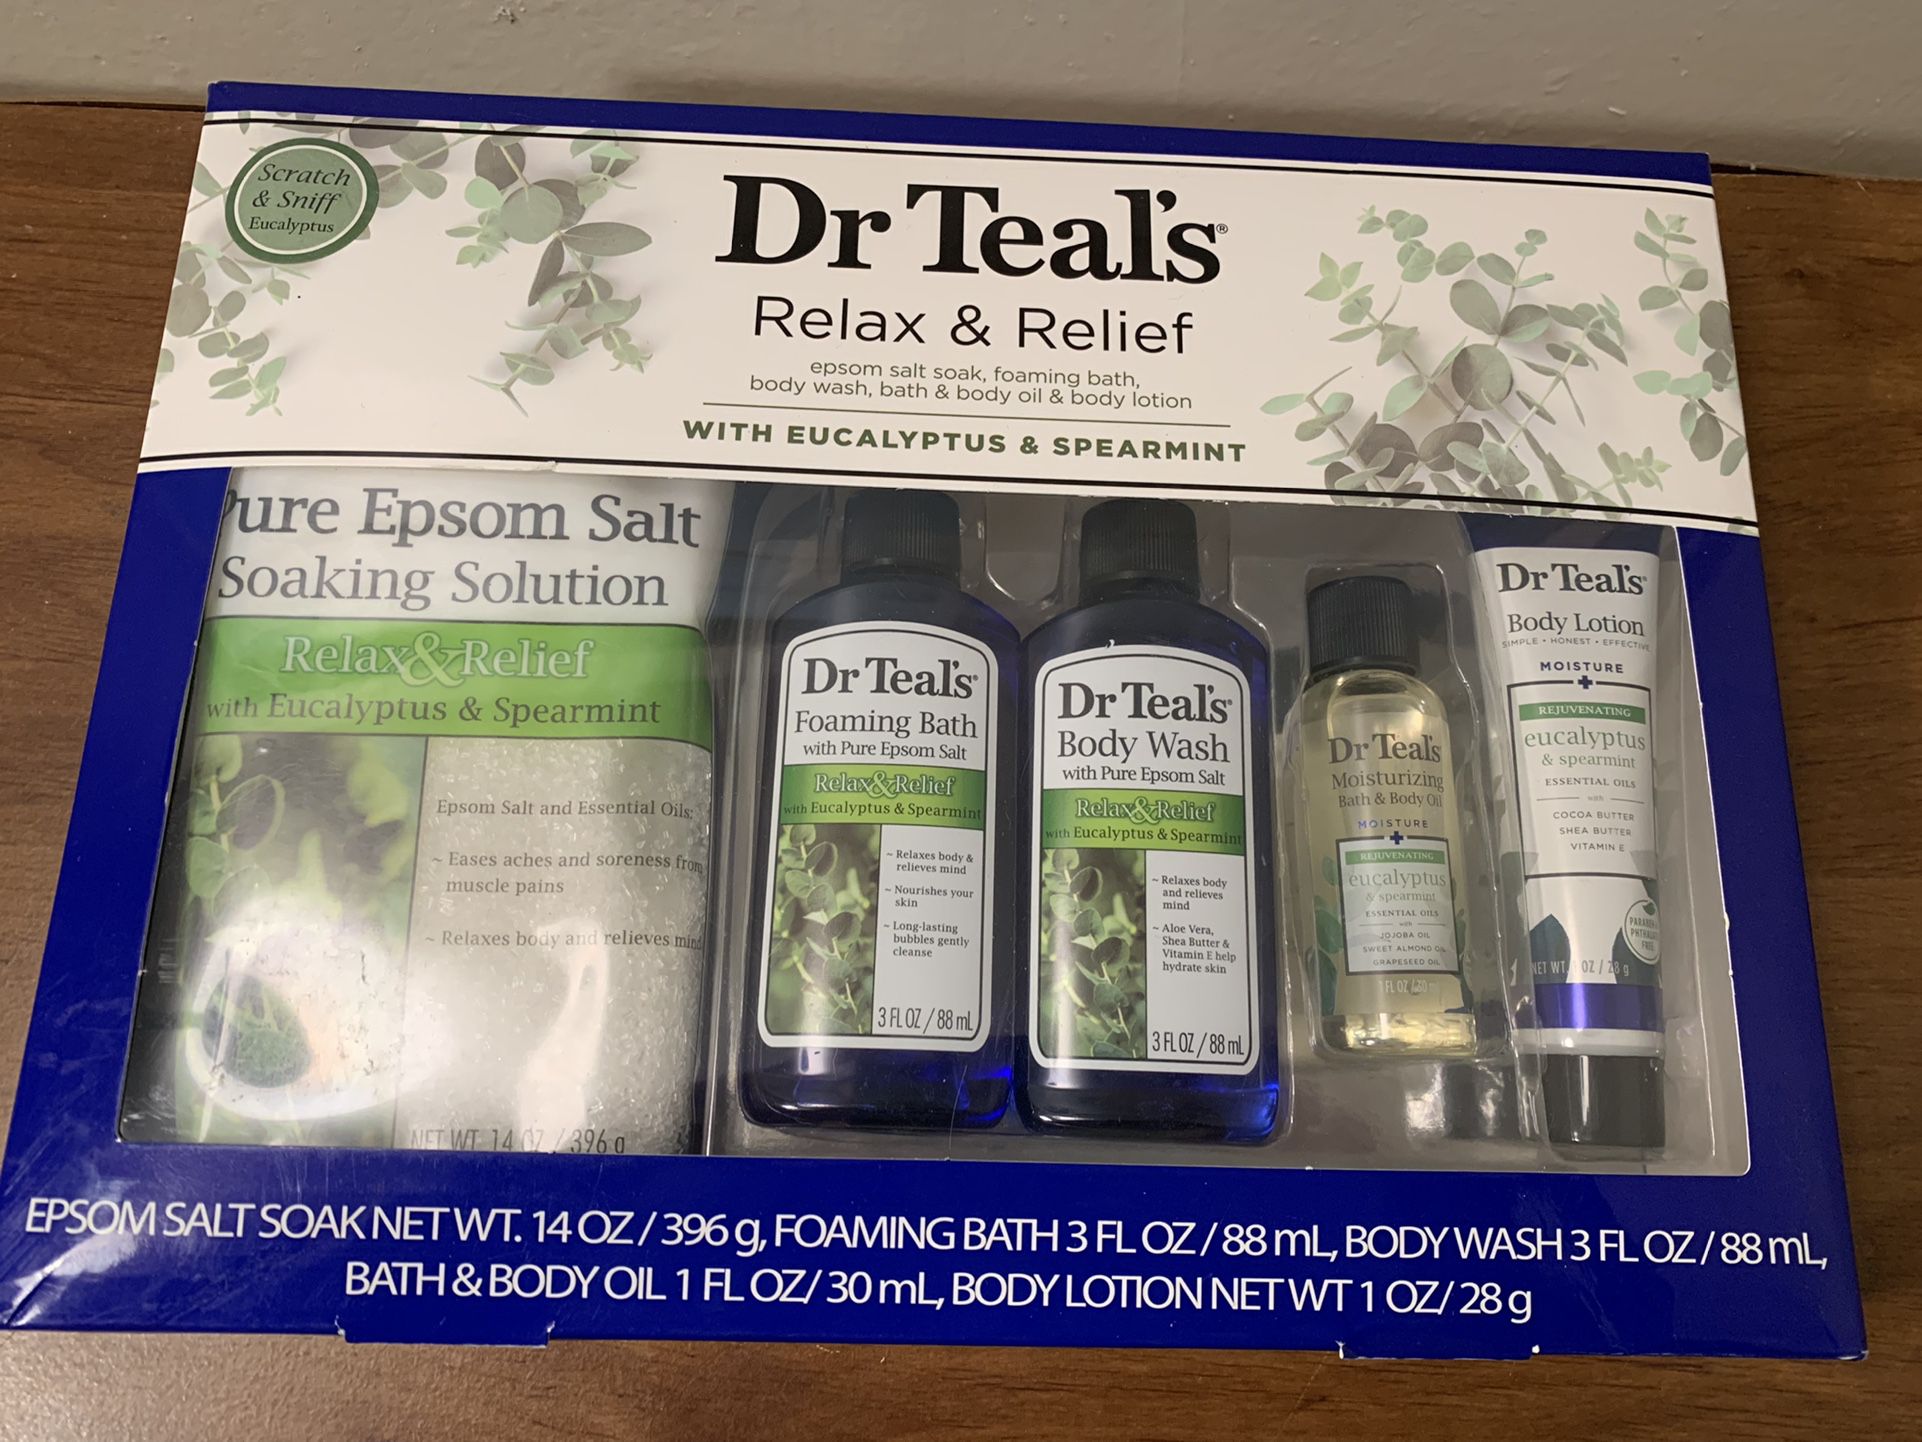 Dr Teal's Eucalyptus & Spearmint Relax & Relief Full Regimen 5-piece Gift Set (Epsom Salt Soaking Solution, Foaming Bath, Body Wash, Moisturizing Bath